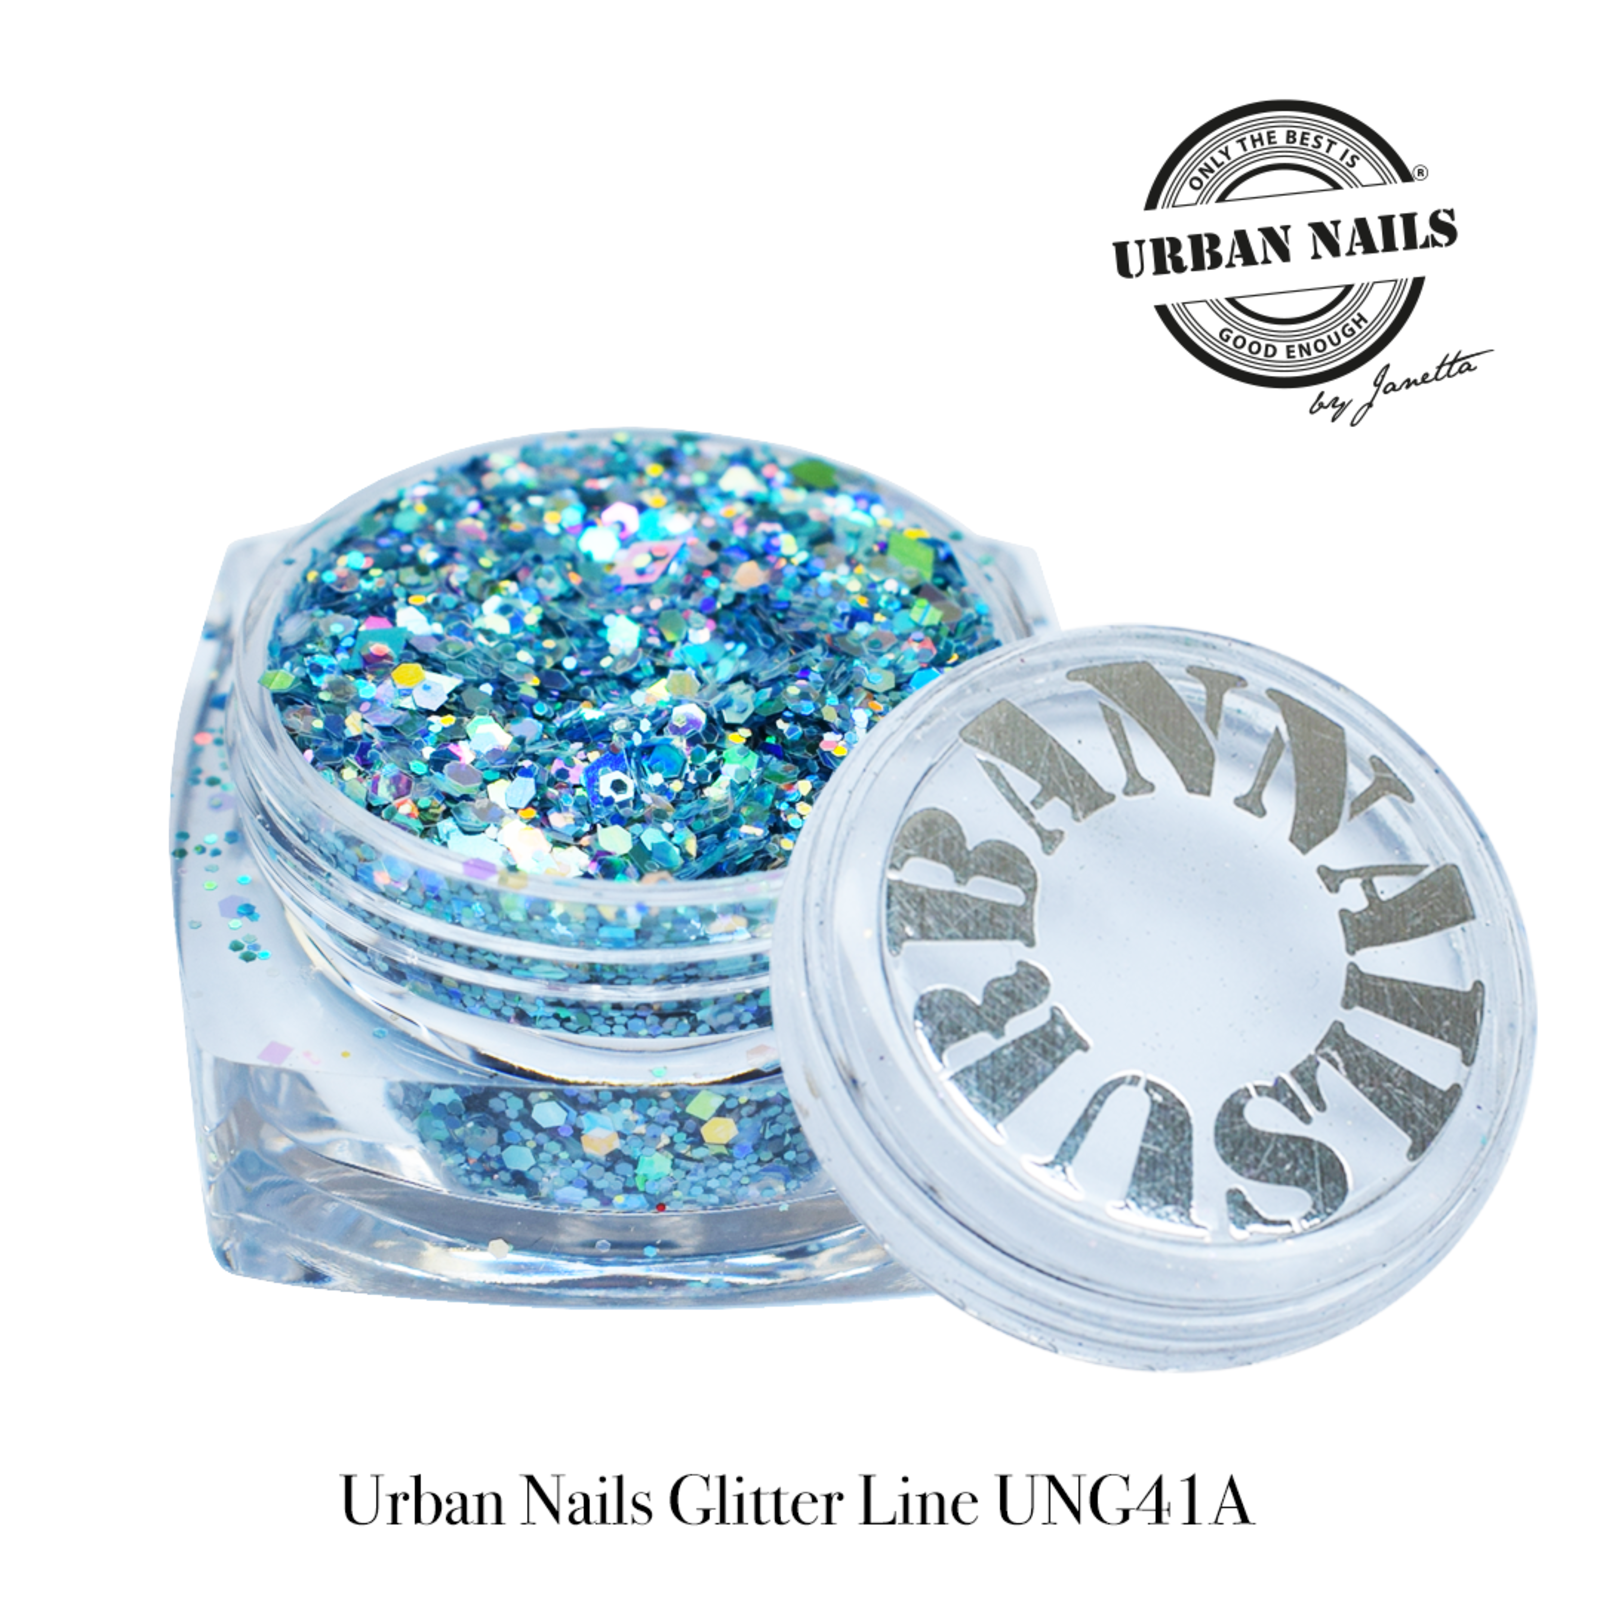 Urban nails Glitter Line UNG41-A